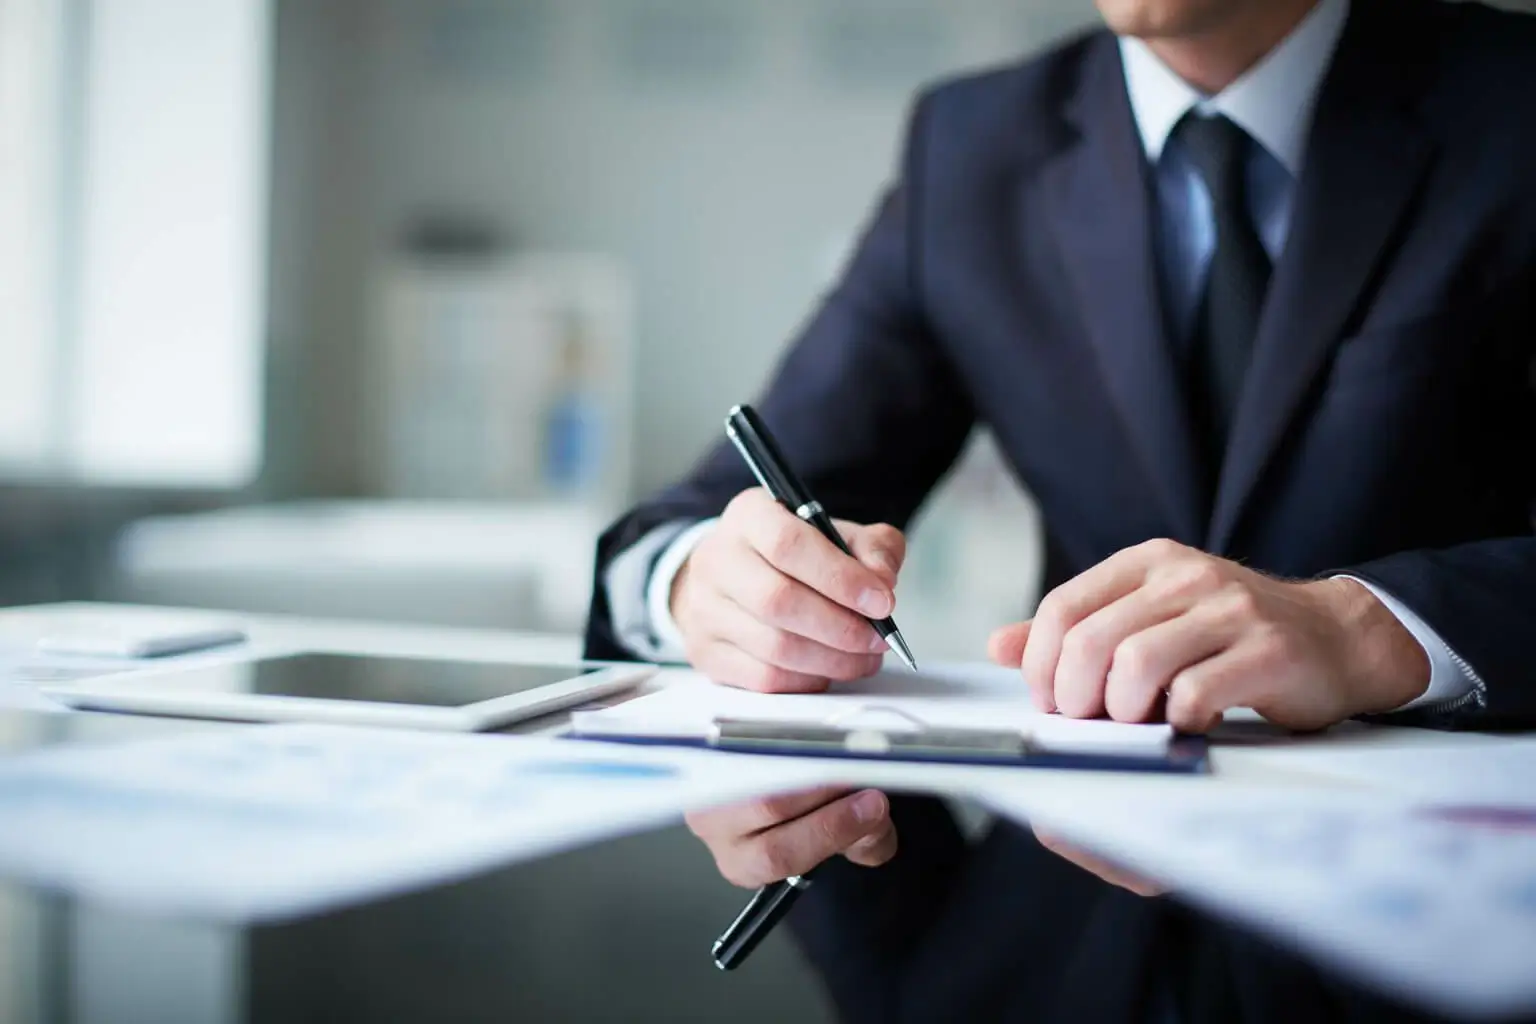 Senior finance executive job description | Top 10 duties